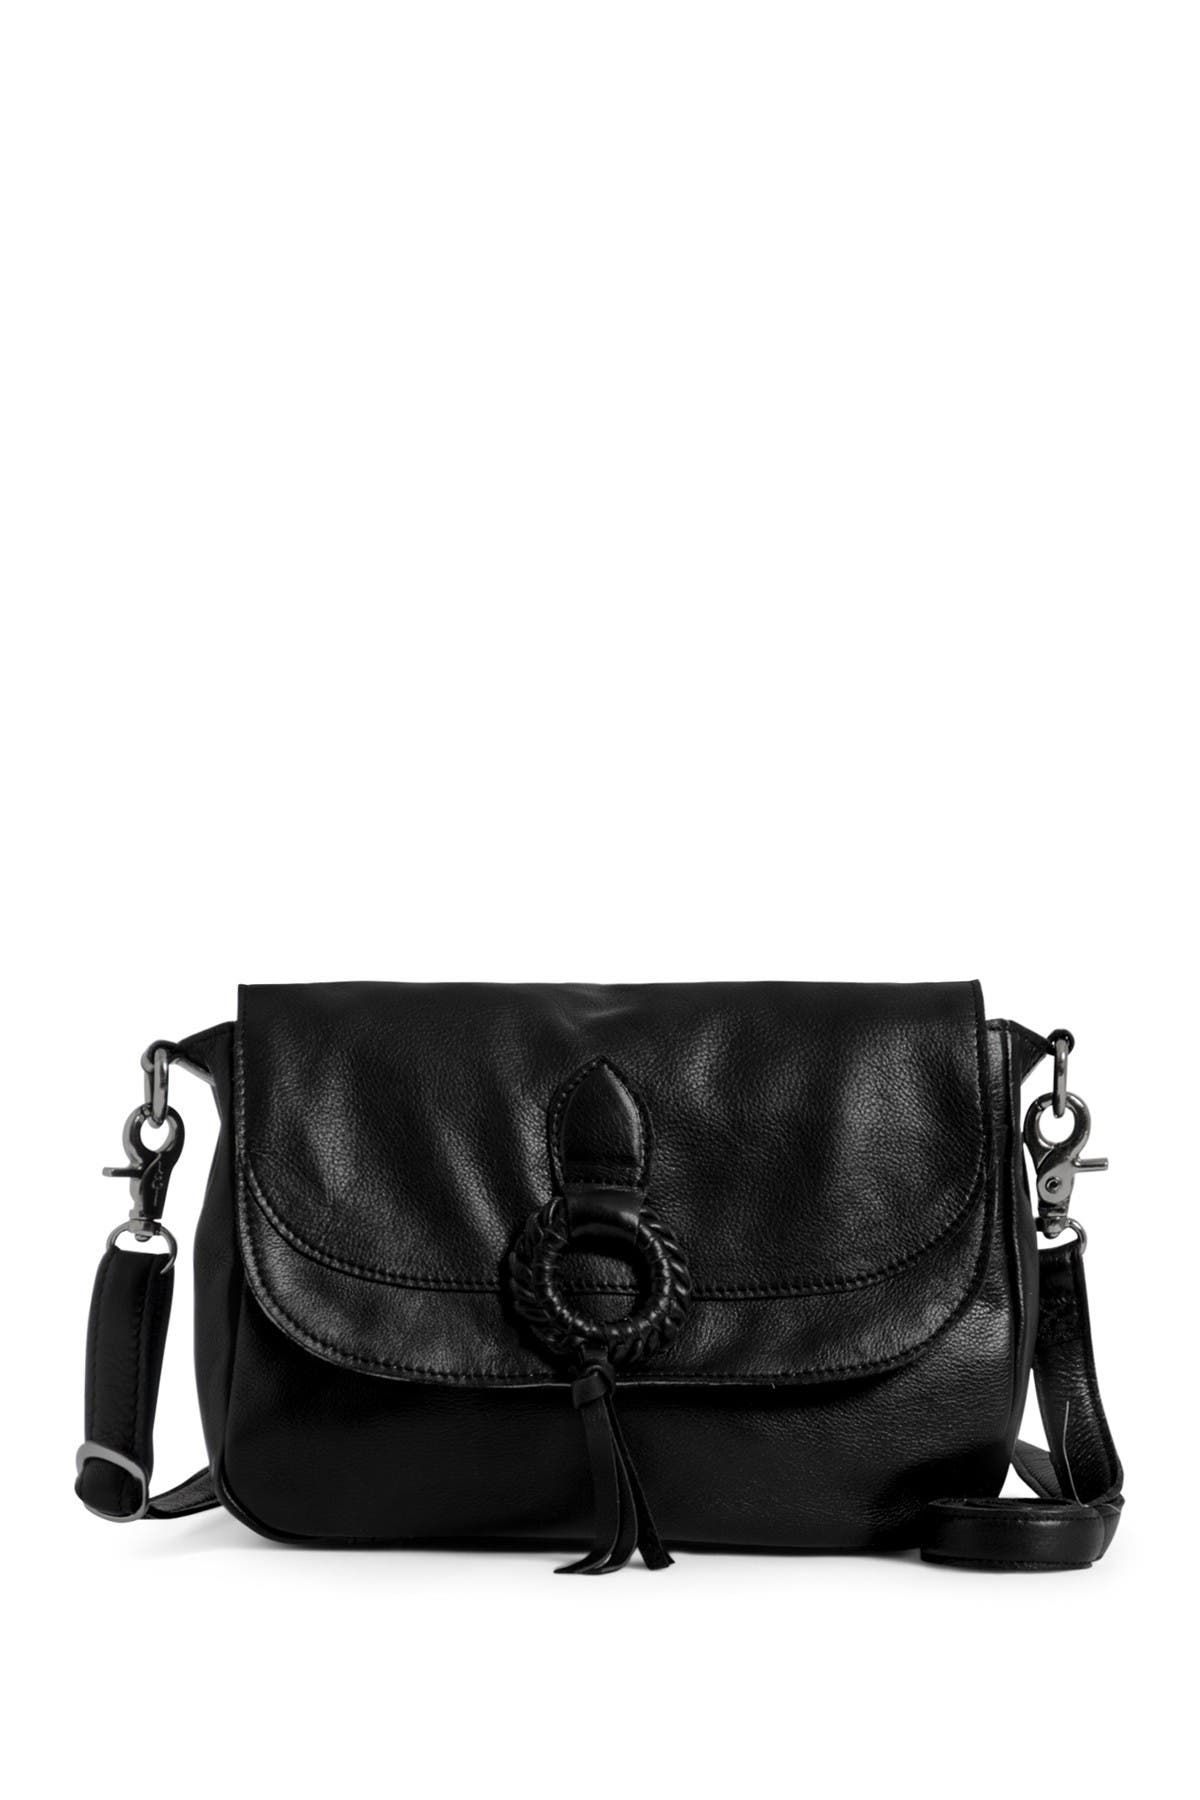 Day & Mood Fillipa Crossbody Bag In Black | ModeSens